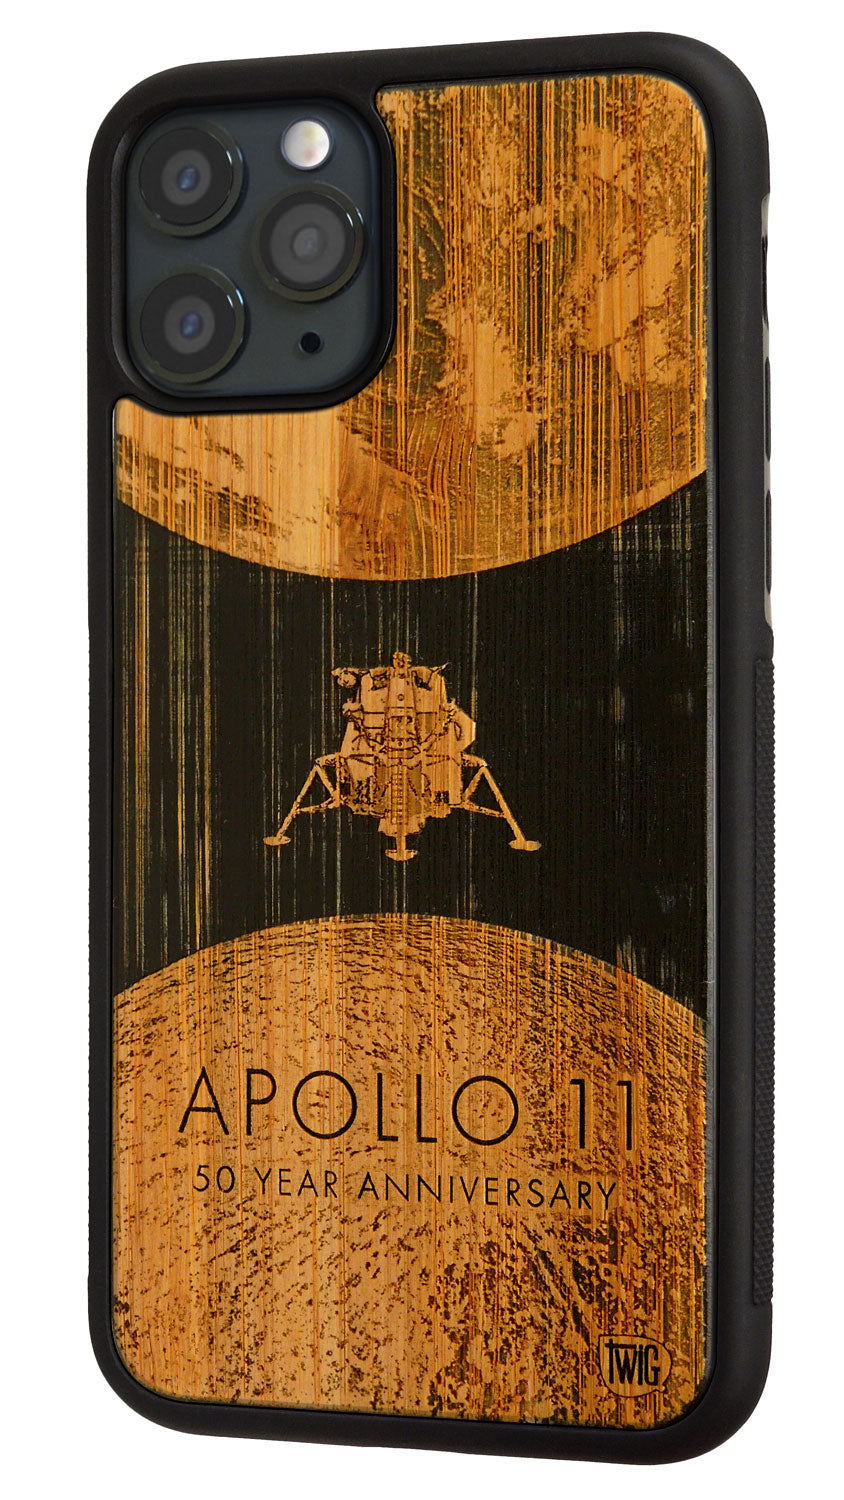 Apollo 11 - Bamboo iPhone Case, iPhone Case - Twig Case Co.